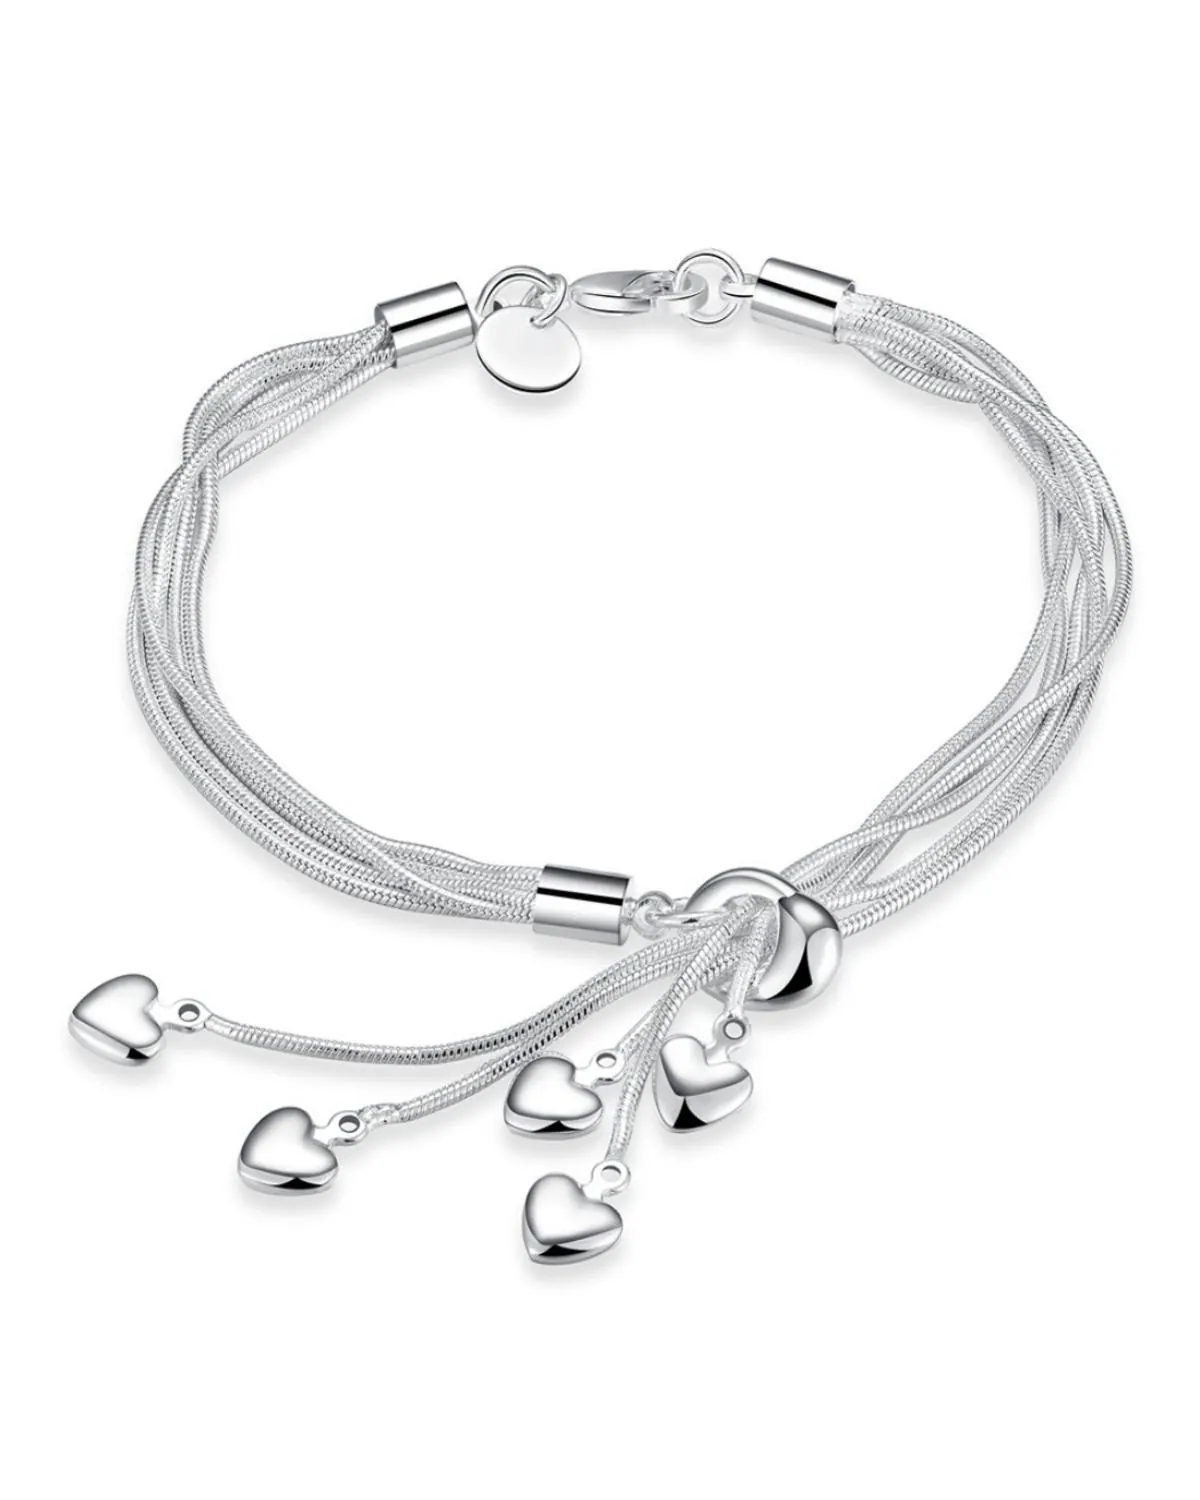 Buy YouBella Stylish Latest Design Jewellery Silver Plated Charm